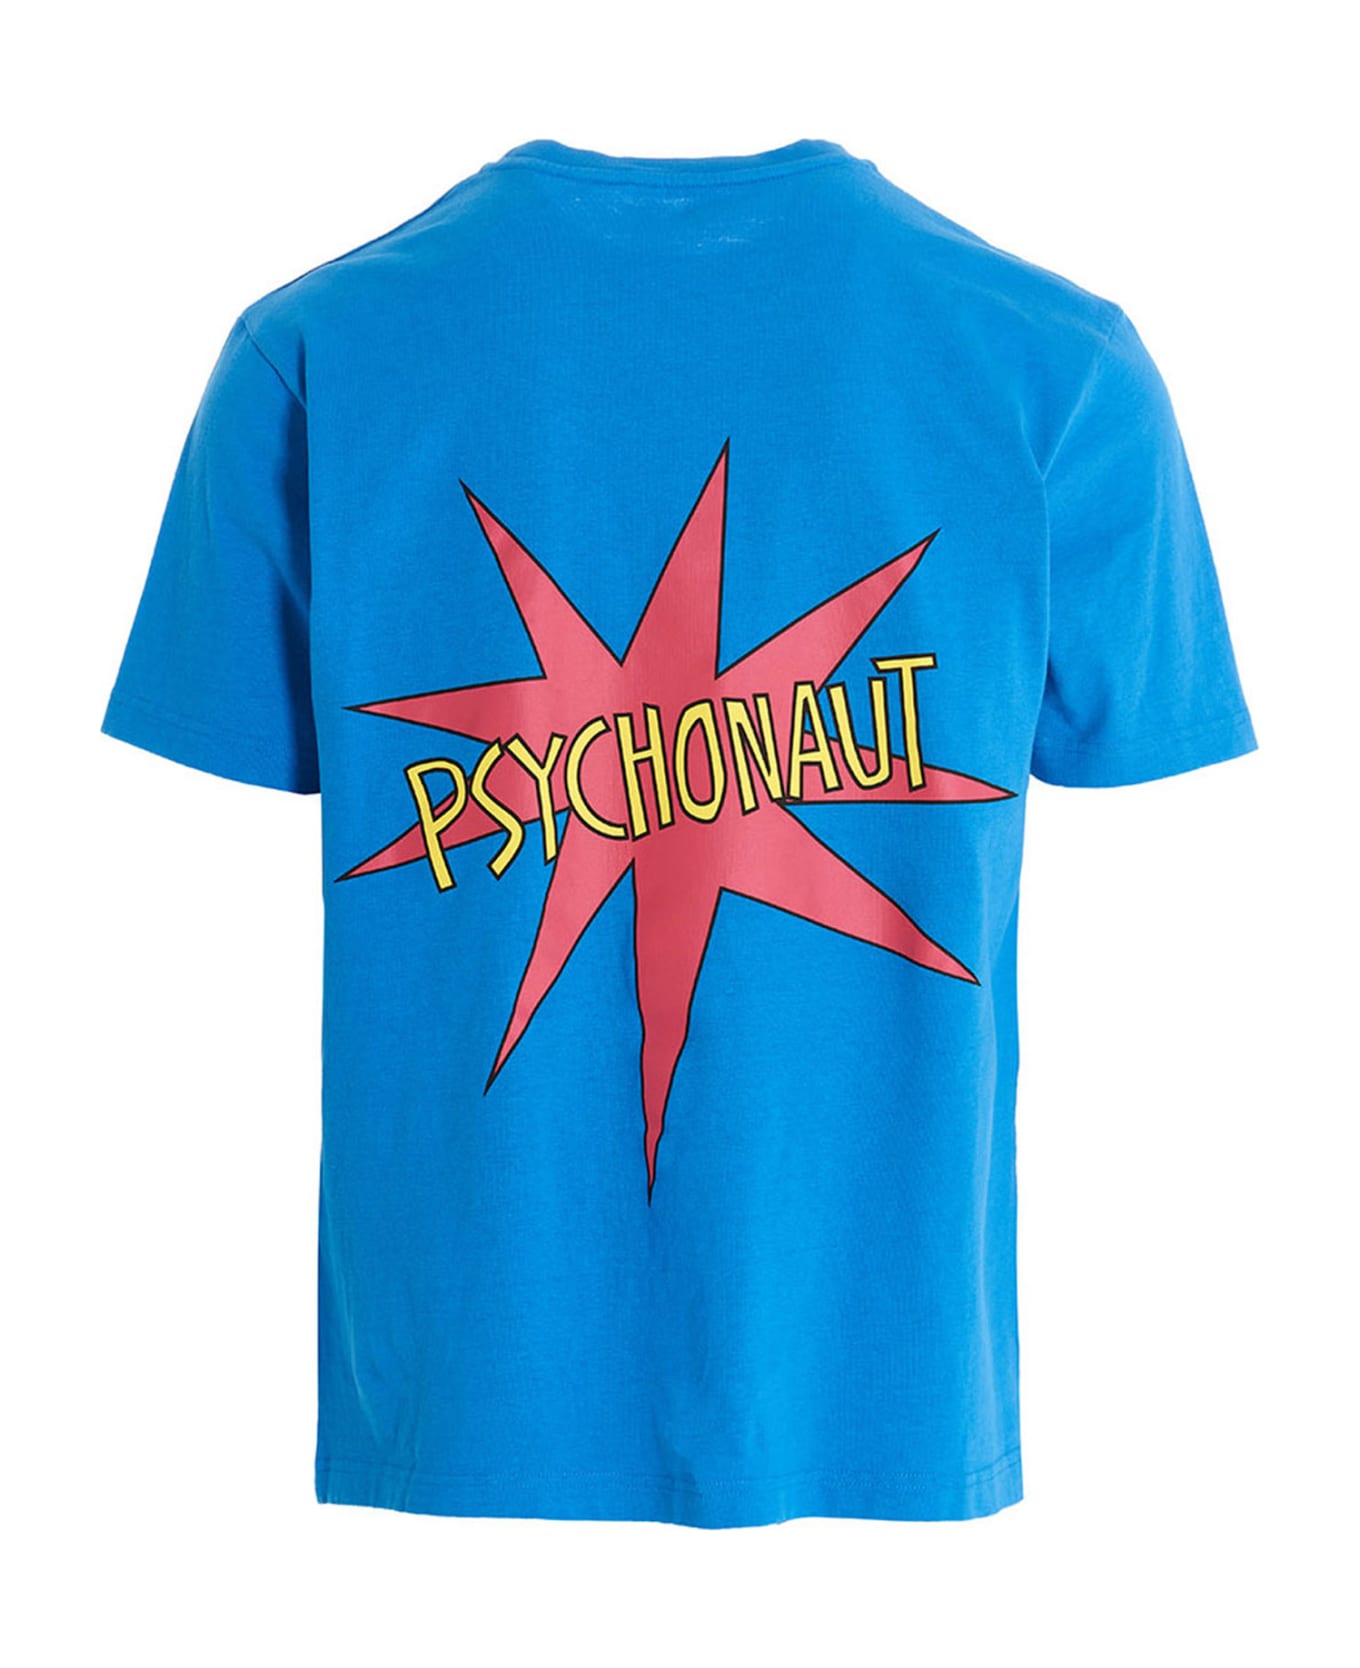 MSFTSrep 'psyconaut' T-shirt - Blue